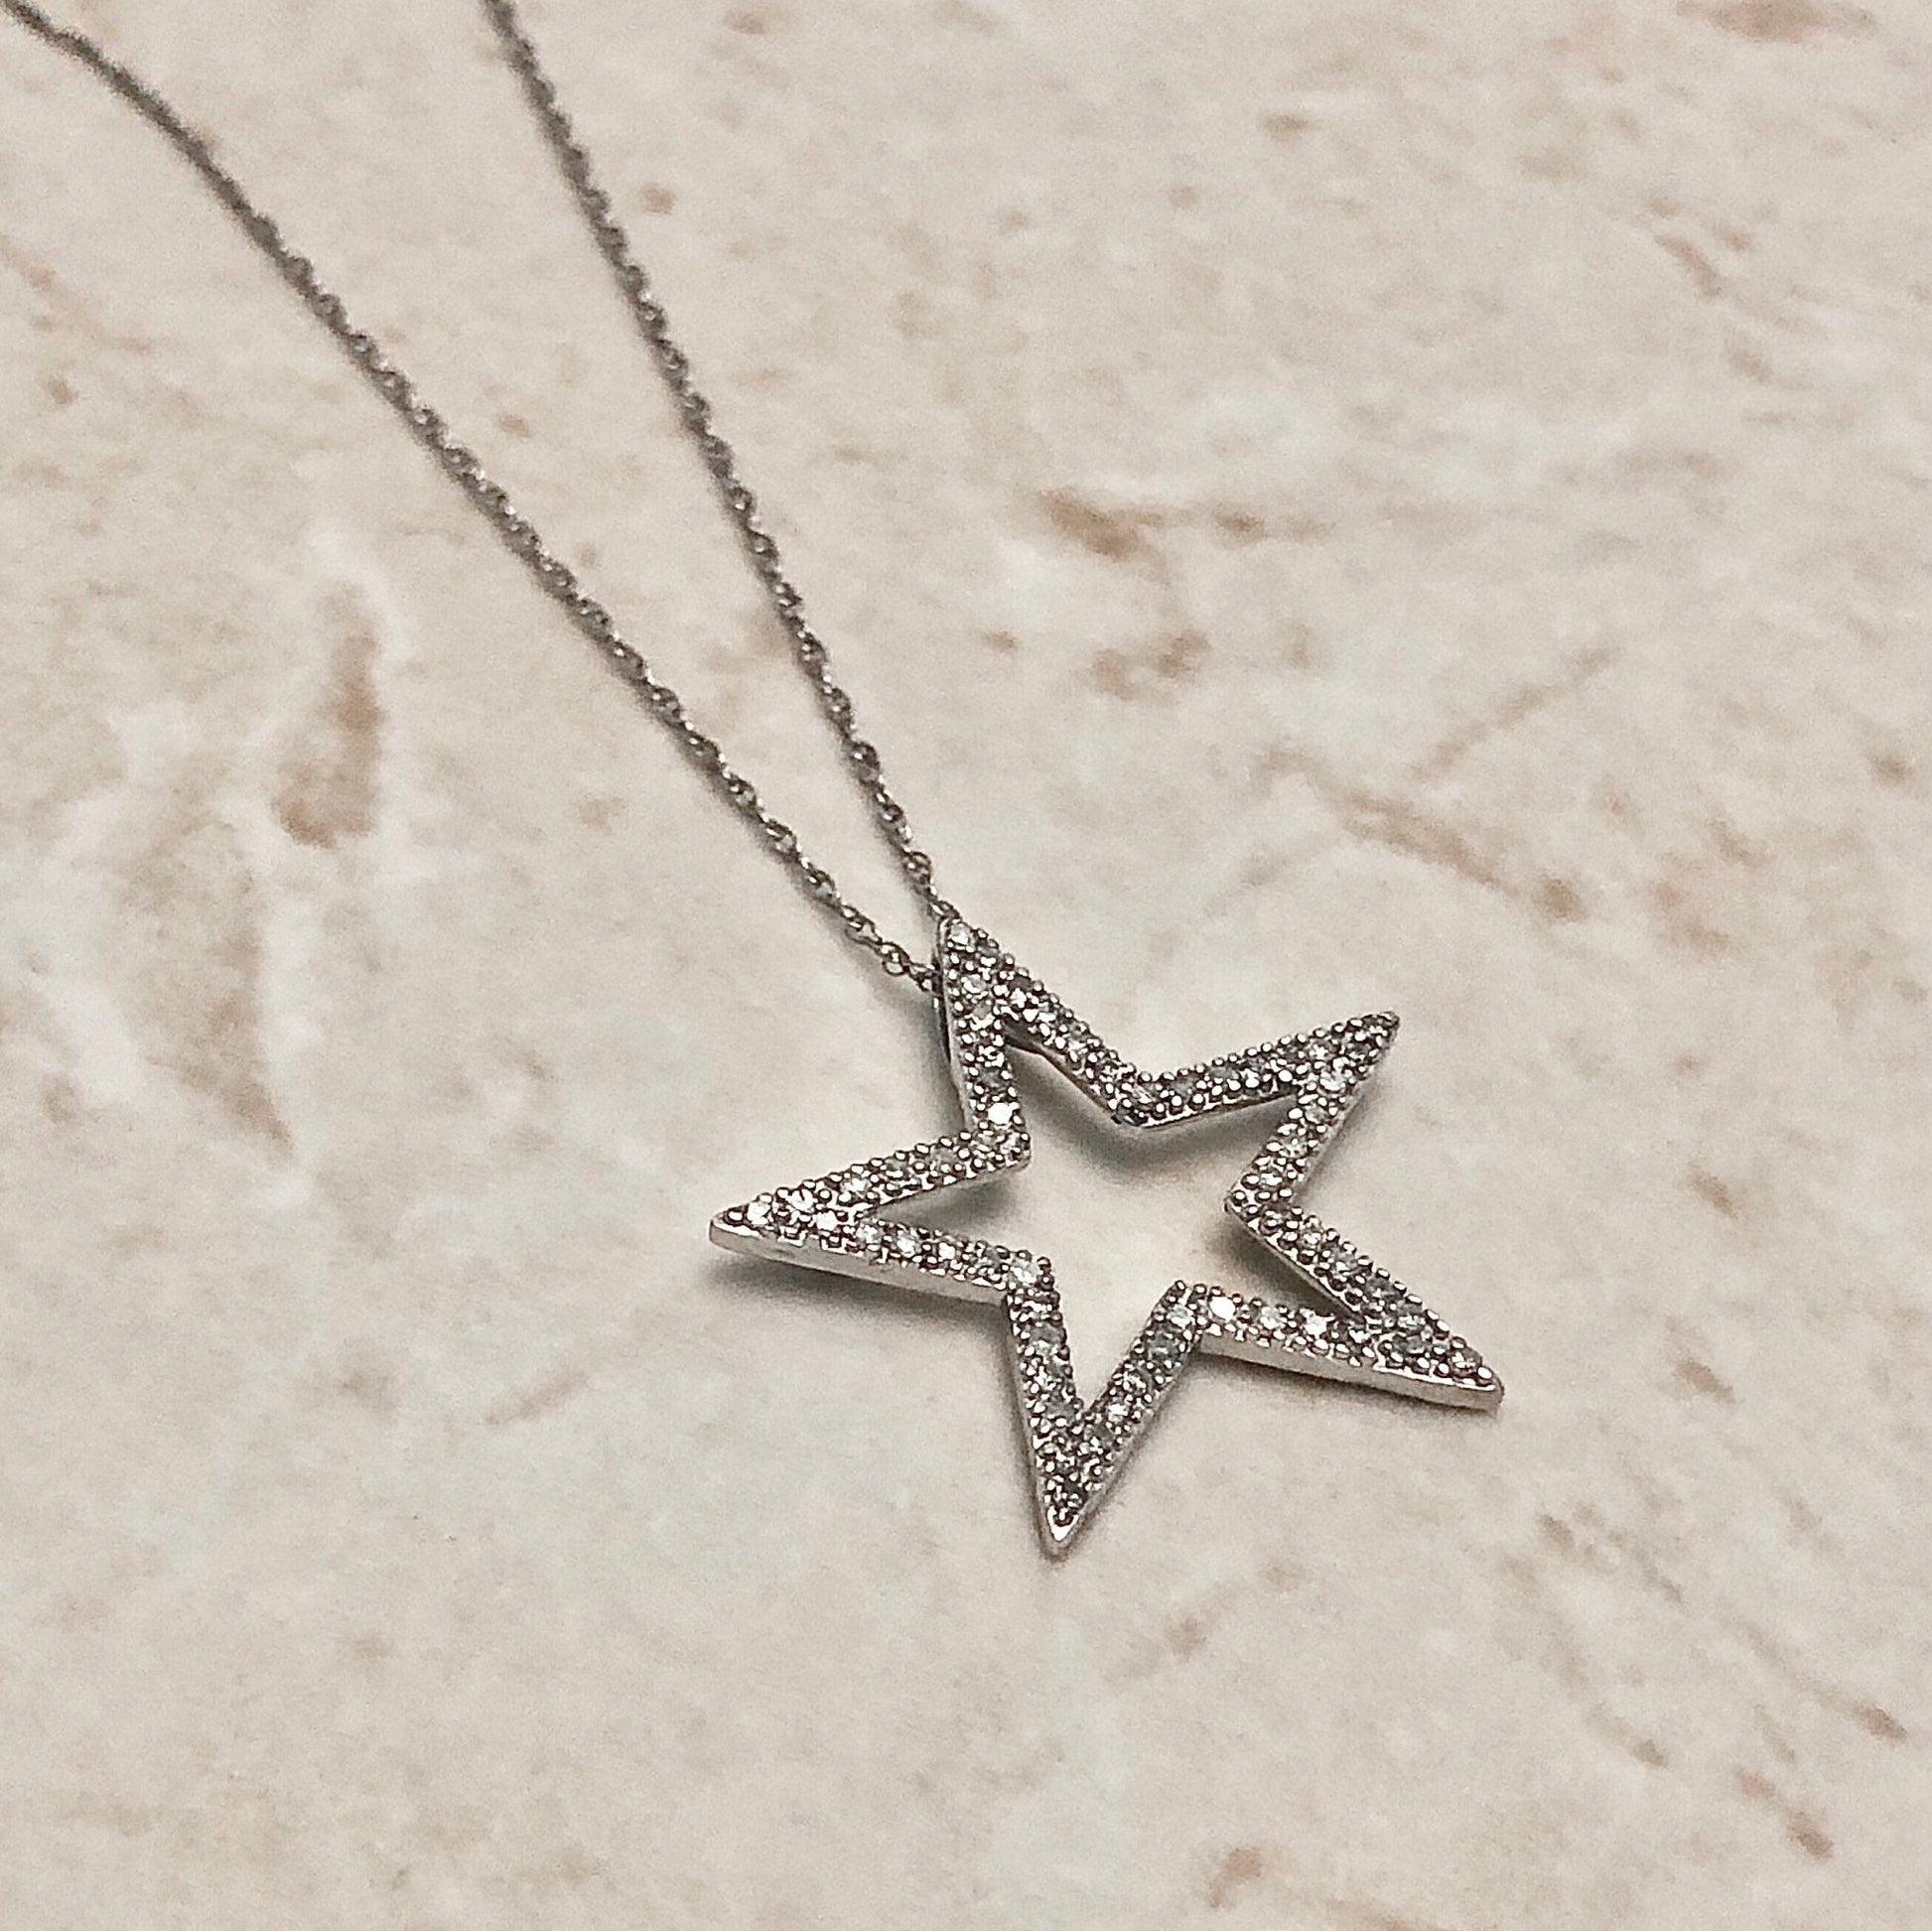 White Gold Star Diamond Pendant Necklace - 10 Karat White Gold - Diamond Necklace - Birthday Gift For Her